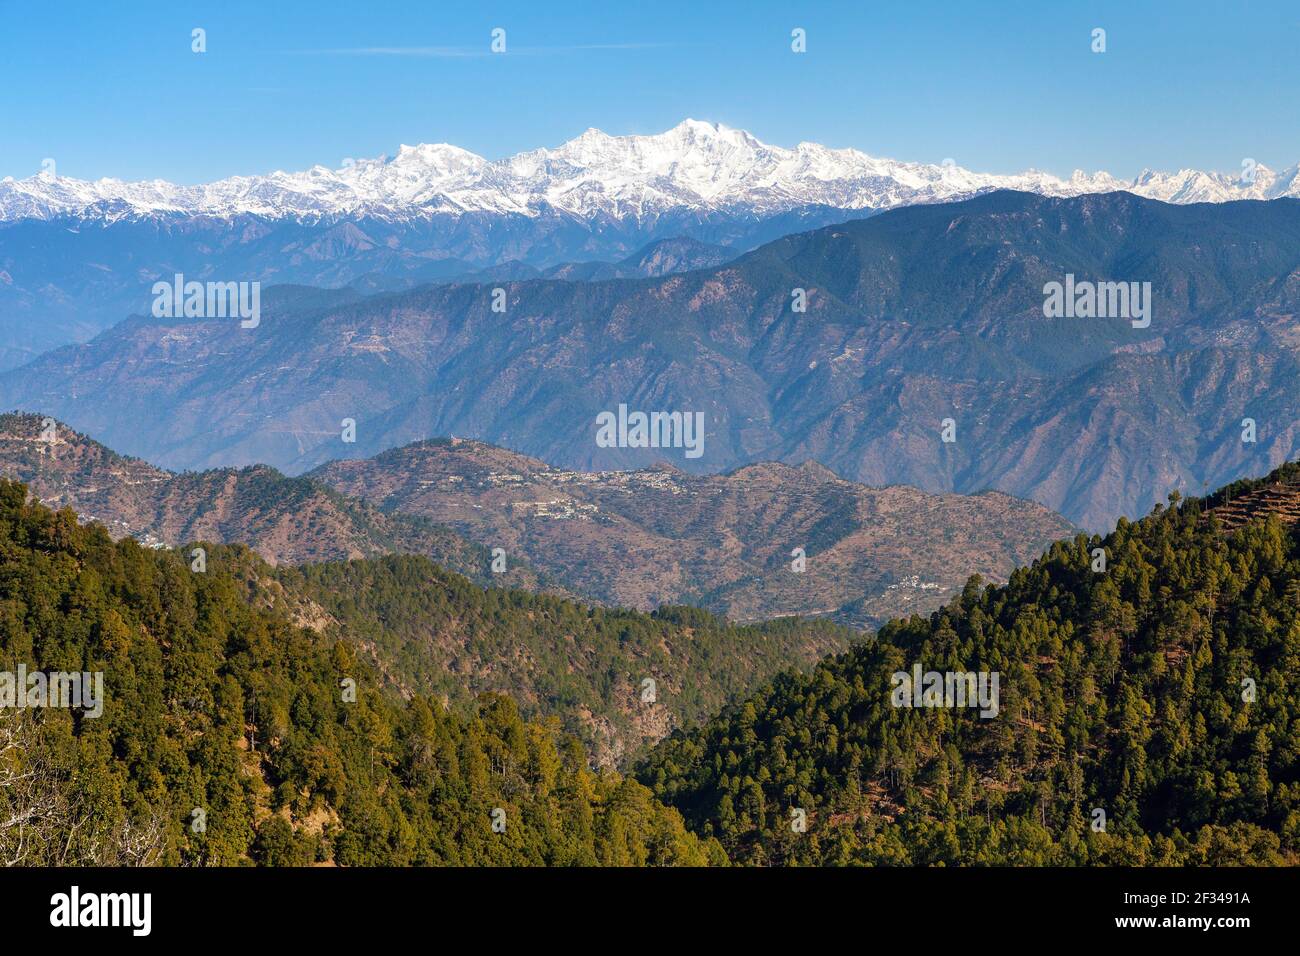 Mount Bandarpunch, Himalaya, panoramic view of Indian Himalayas, great Himalayan range, Uttarakhand India, view from Mussoorie road, Gangotri range Stock Photo